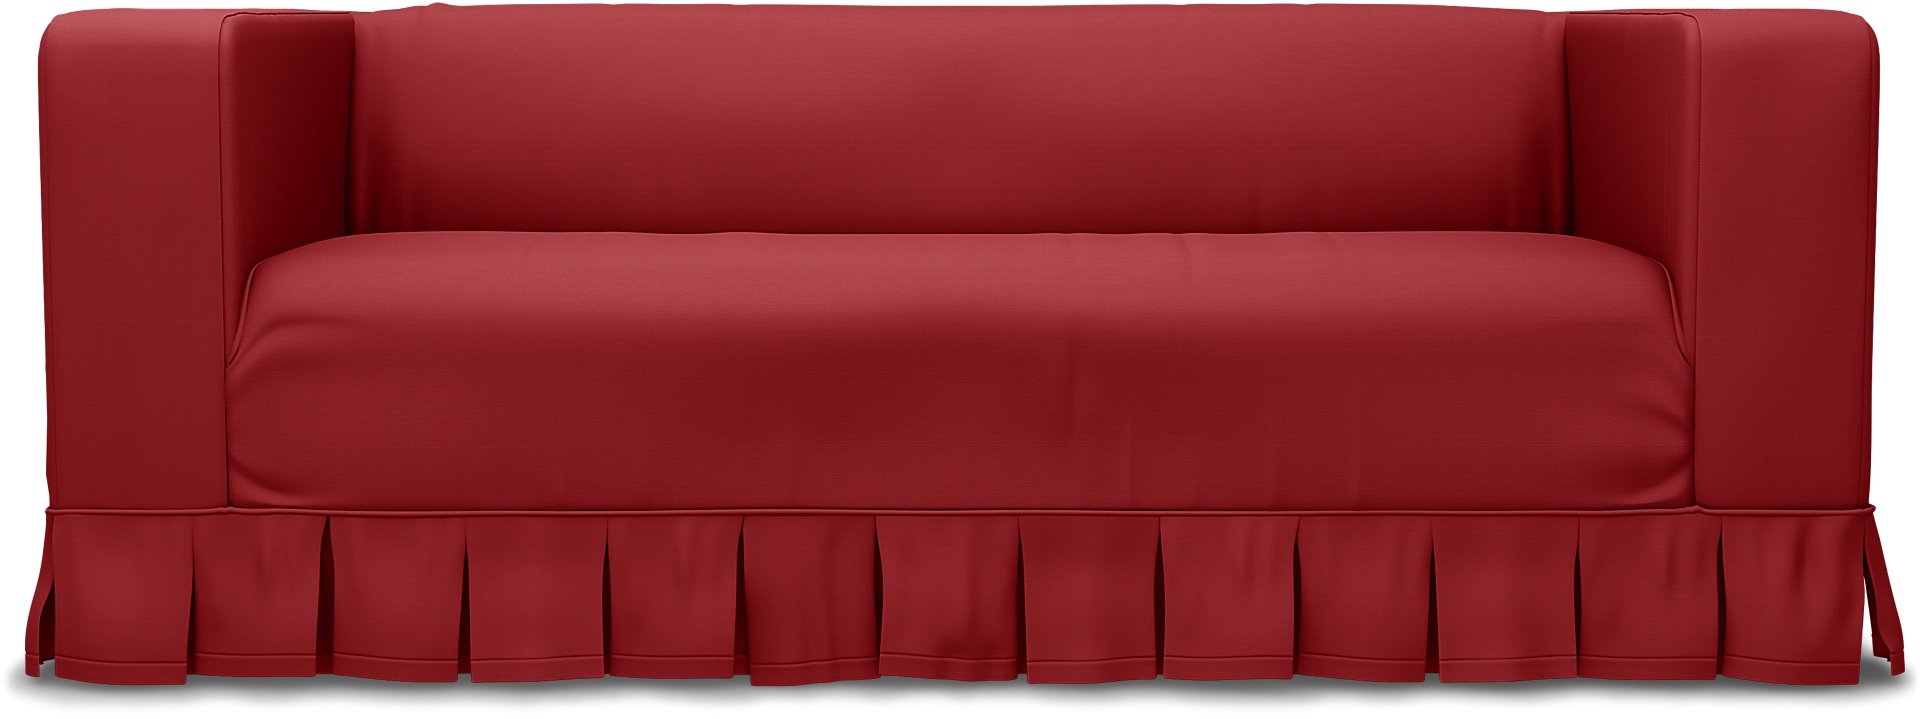 IKEA - Klippan 2 Seater Sofa Cover, Scarlet Red, Cotton - Bemz